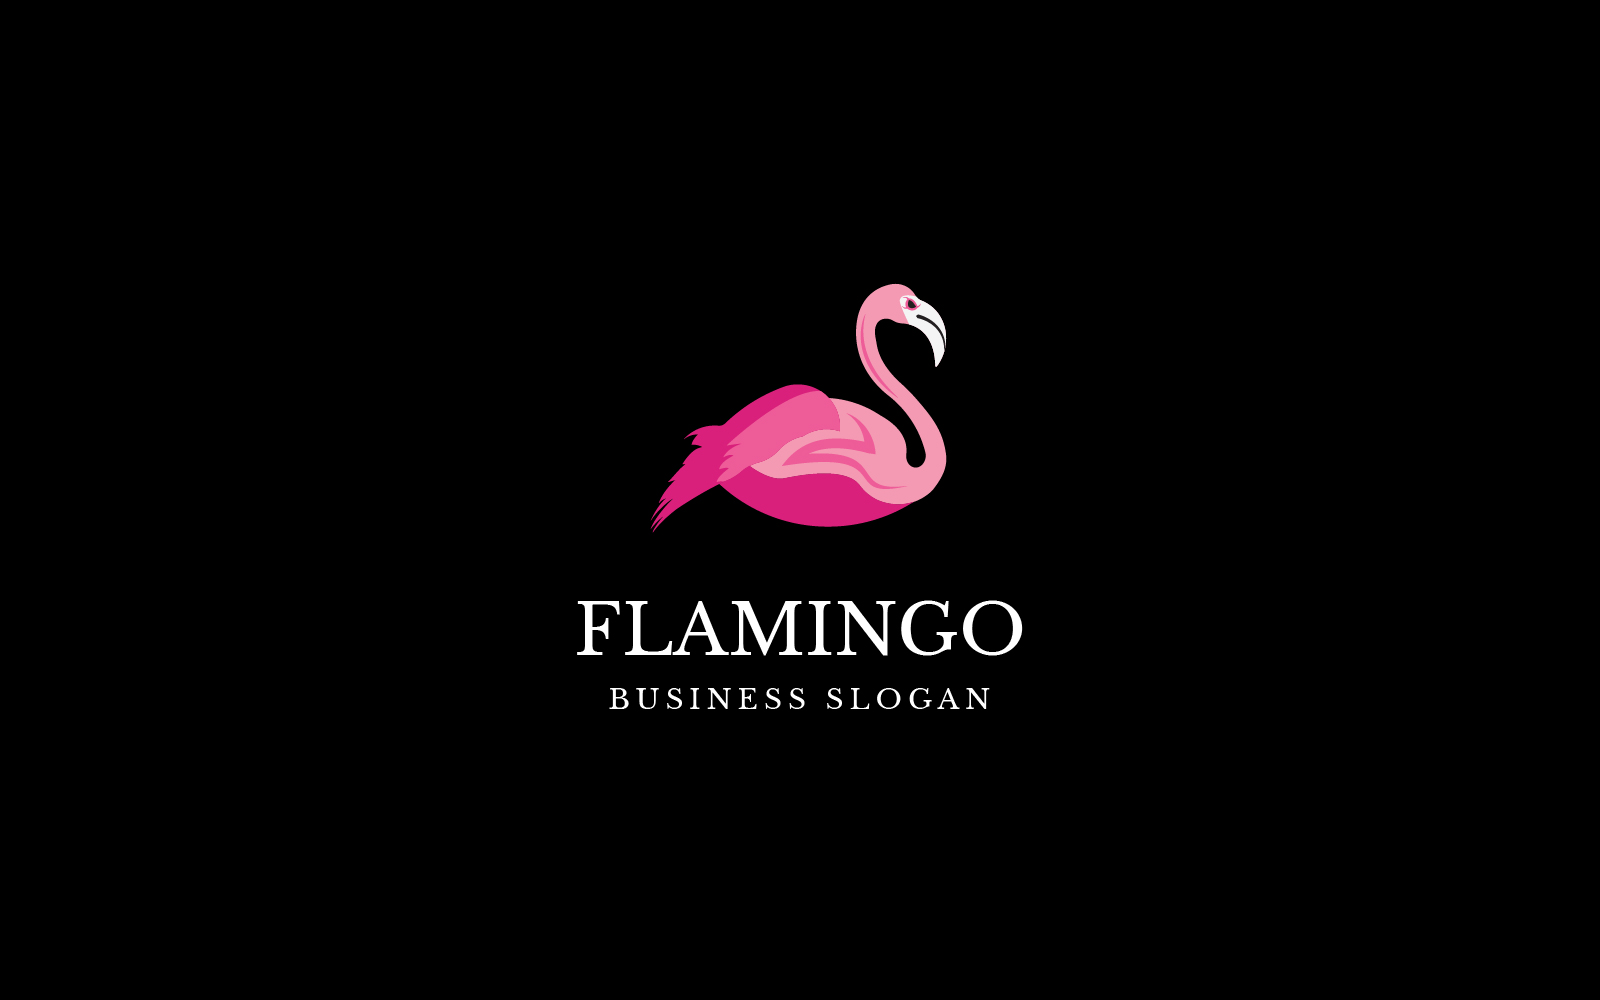 Flamingo bird logo design